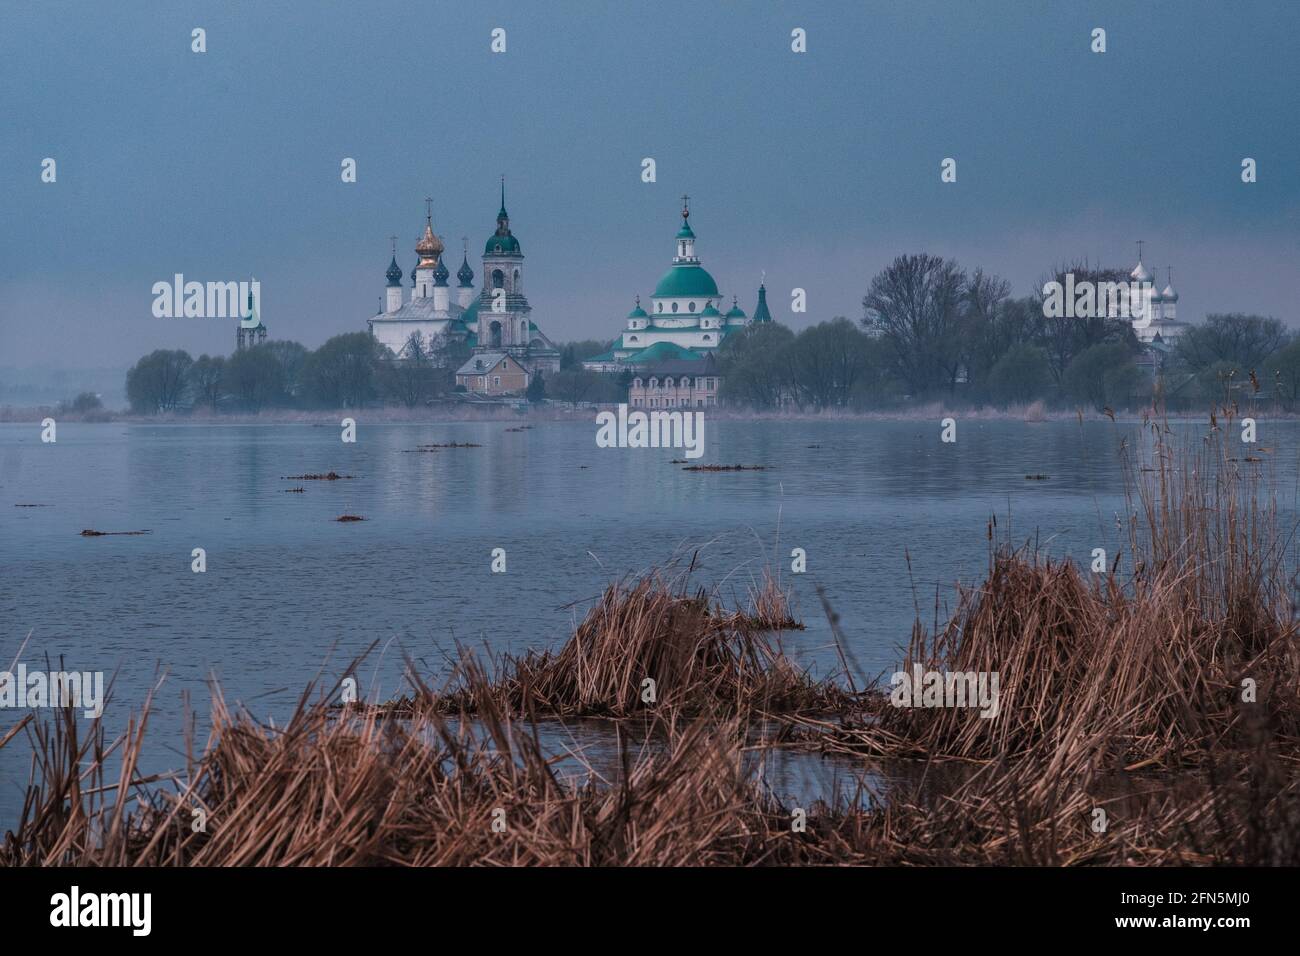 View of Spaso-Yakovlevsky Monastery in Rostov Veliky from Nero's lake on a sunset Stock Photo